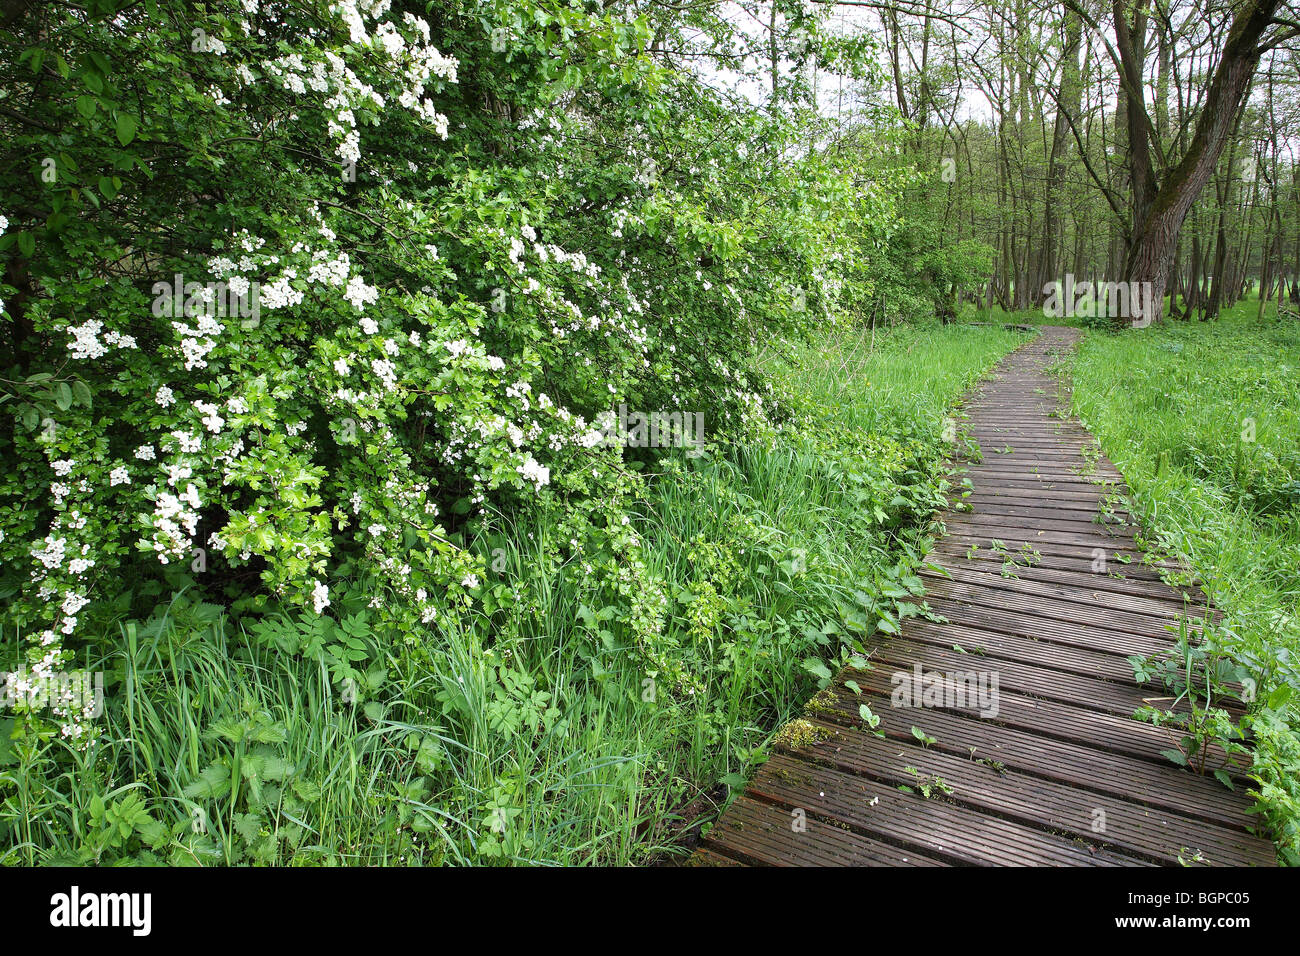 Boardwalk / Raised wooden walkway with wooden fence through marshland with flowering Hawthorn, Belgium Stock Photo